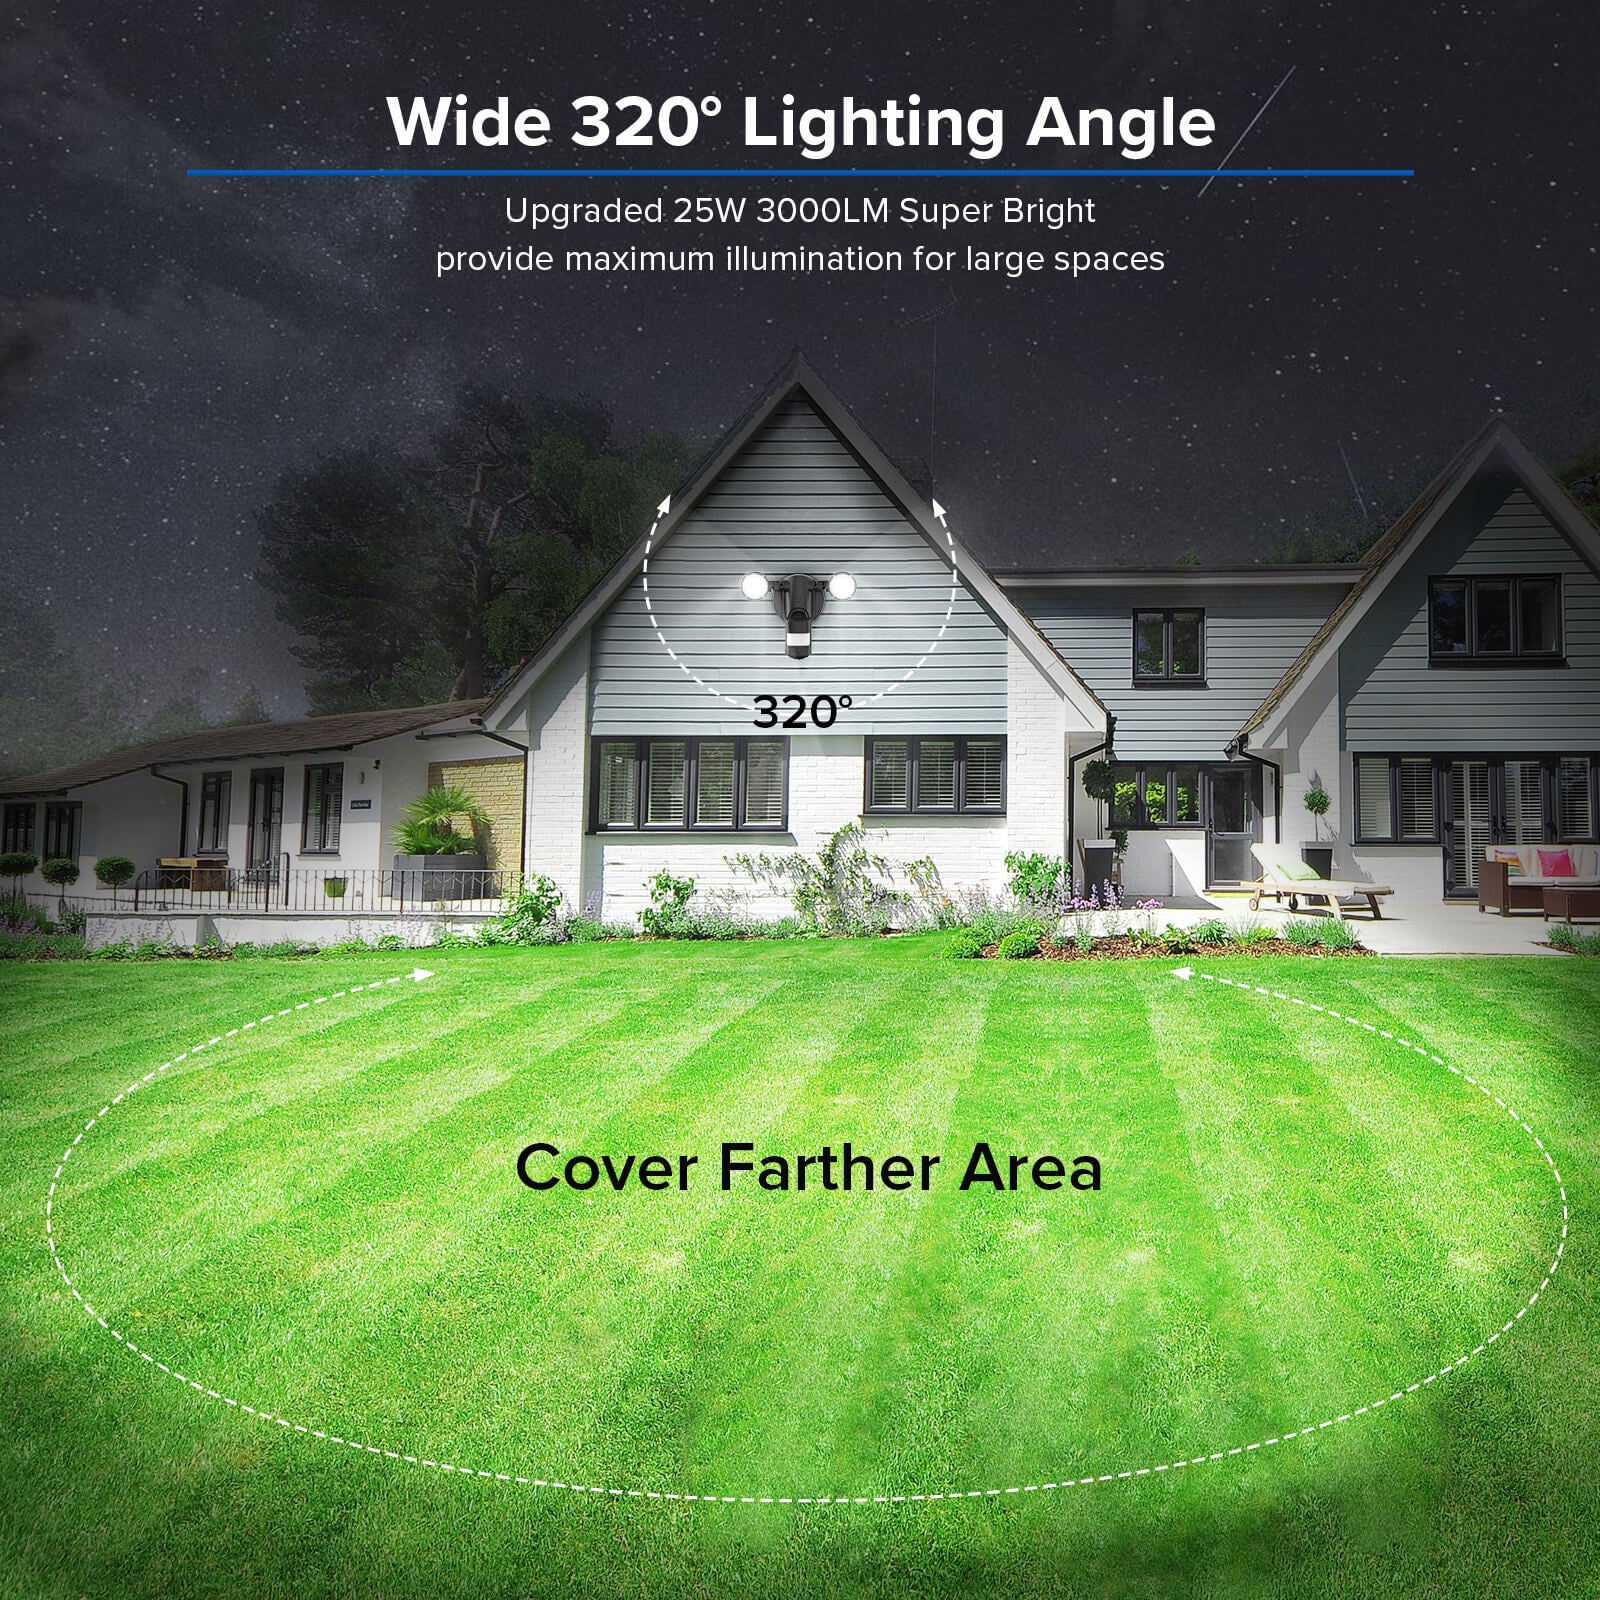 25W LED Security Light (Dusk to Dawn & Motion Sensor) has wide 320° lighting angle, provide maximum illumination for large spaces